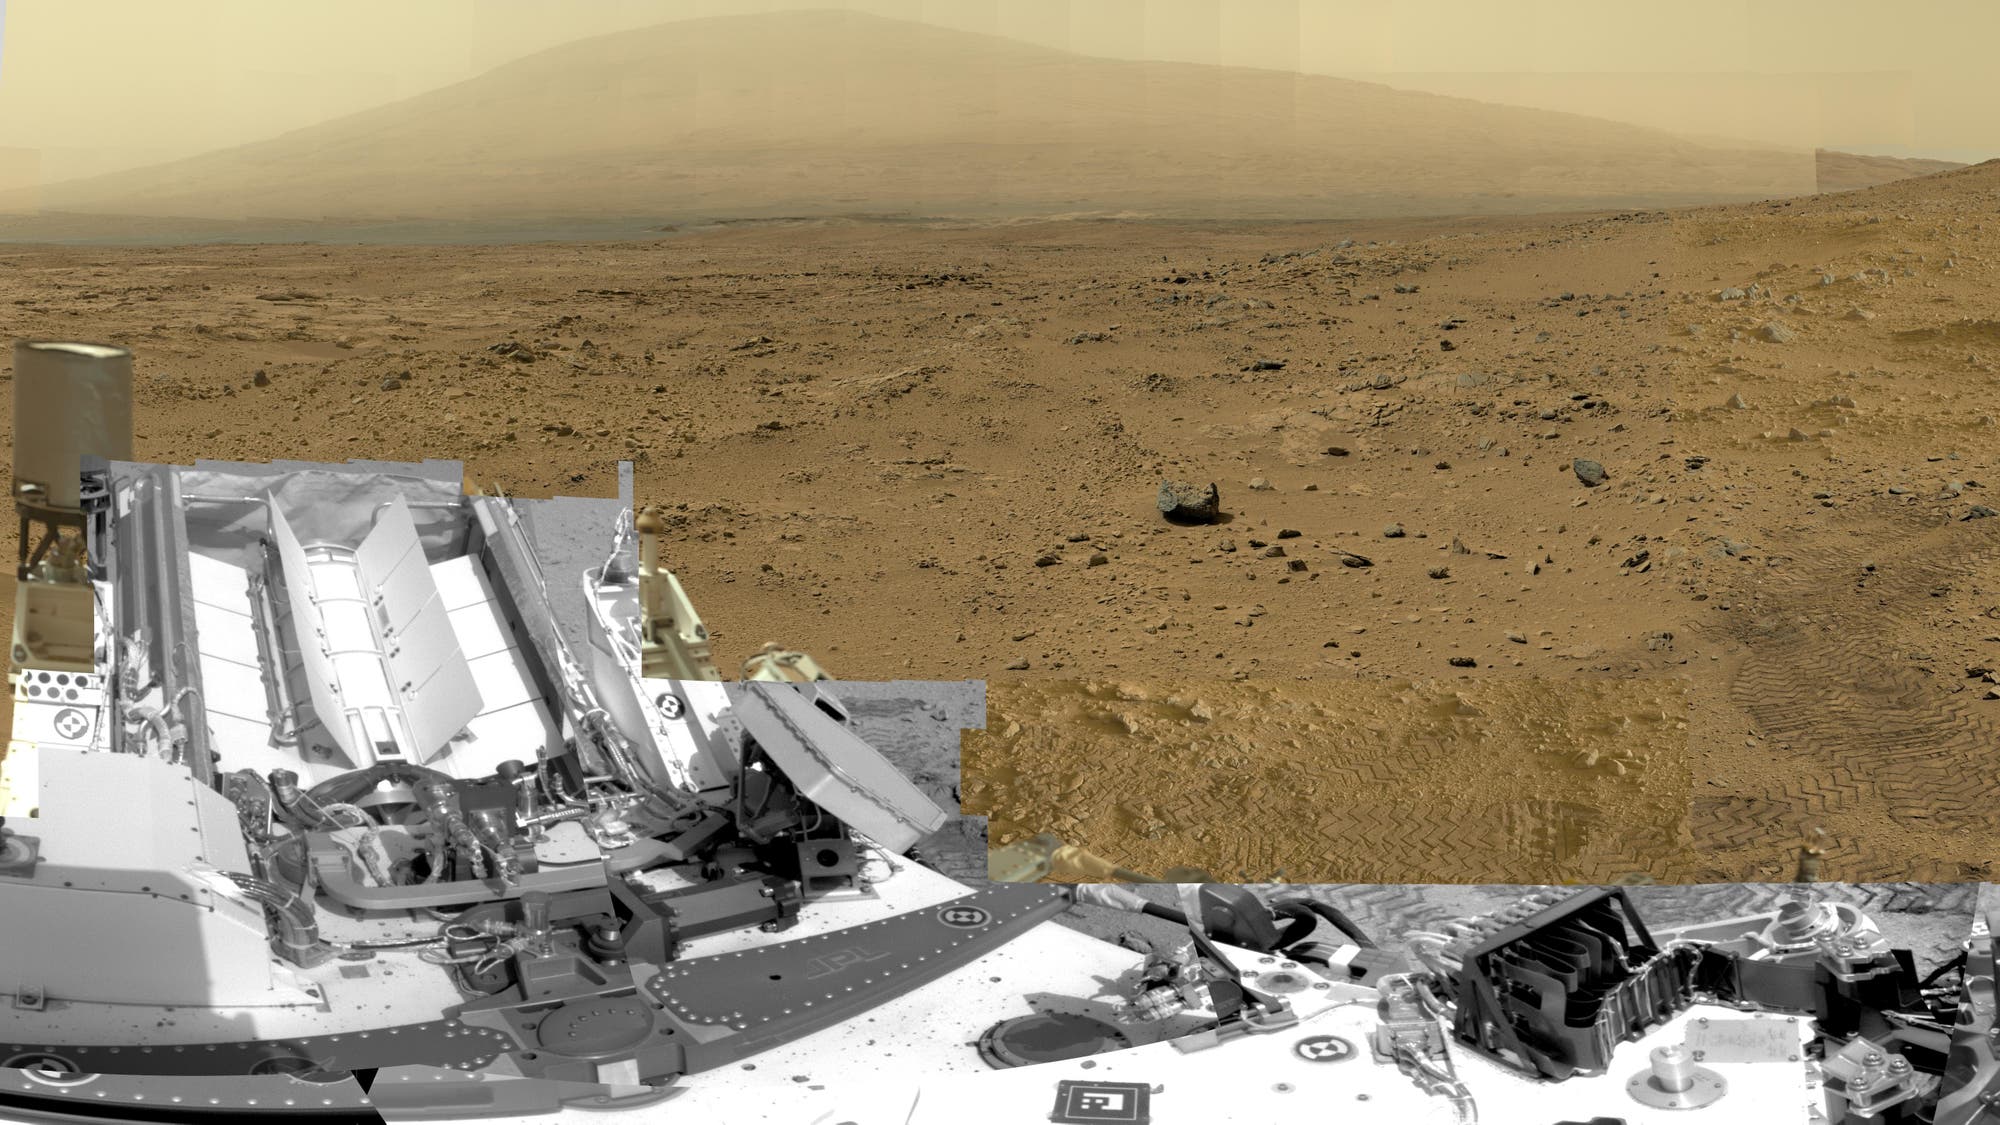 Marspanorama von Curiosity